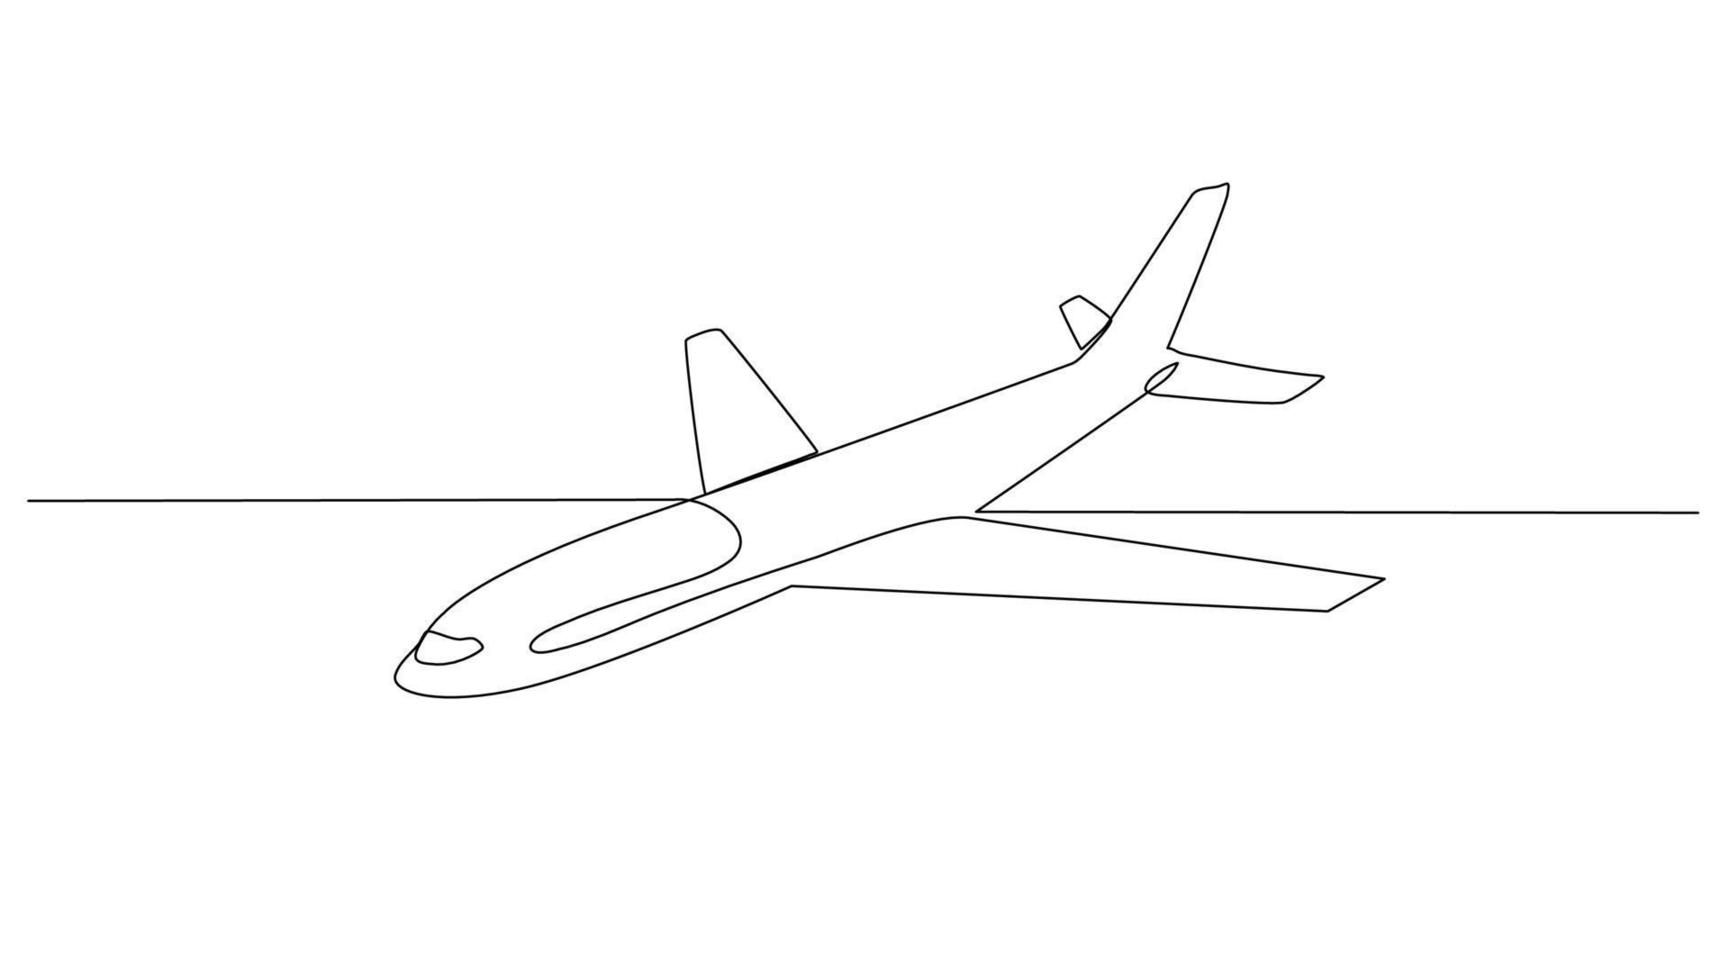 kontinuerlig linje konst luft transport vektor